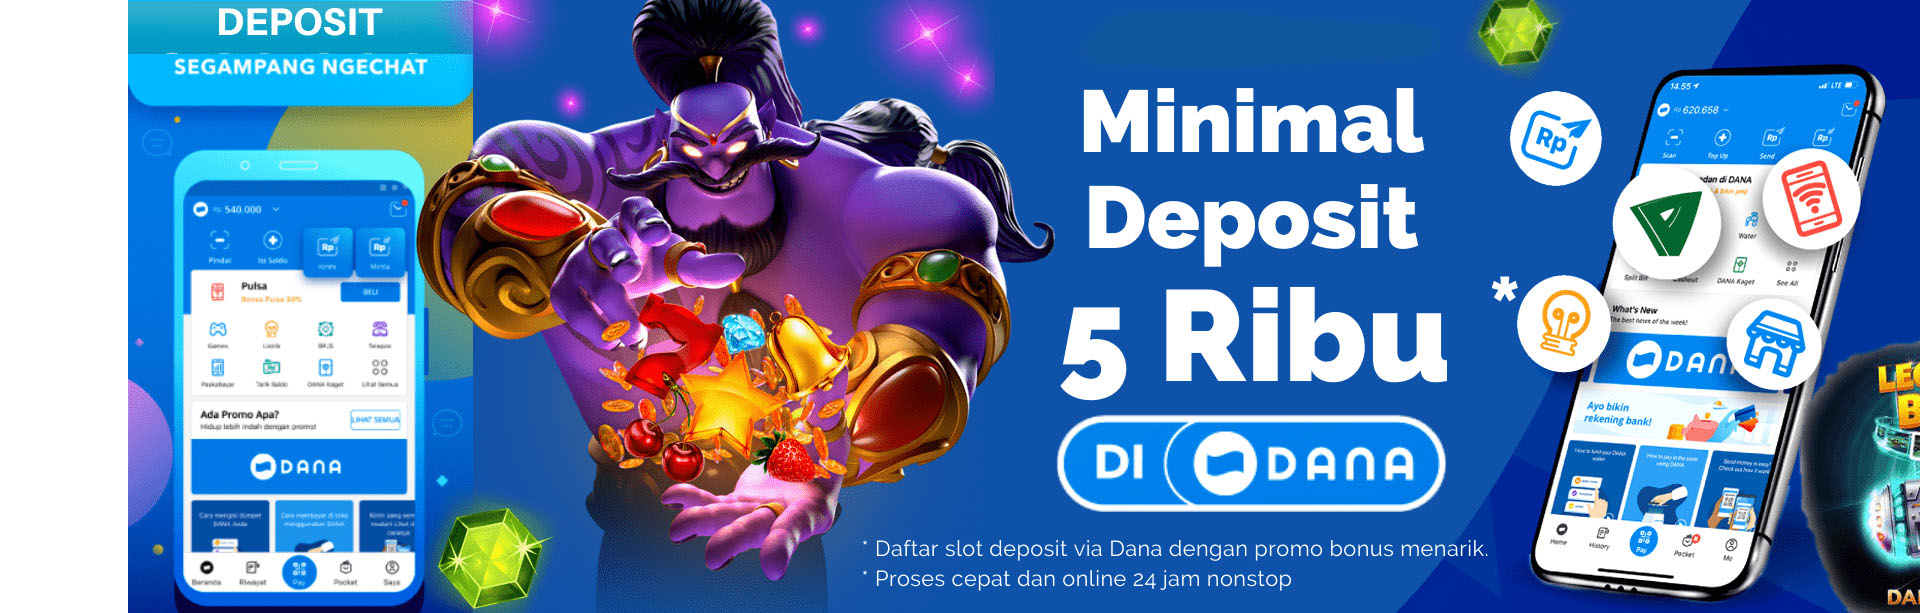 Slot Deposit Dana